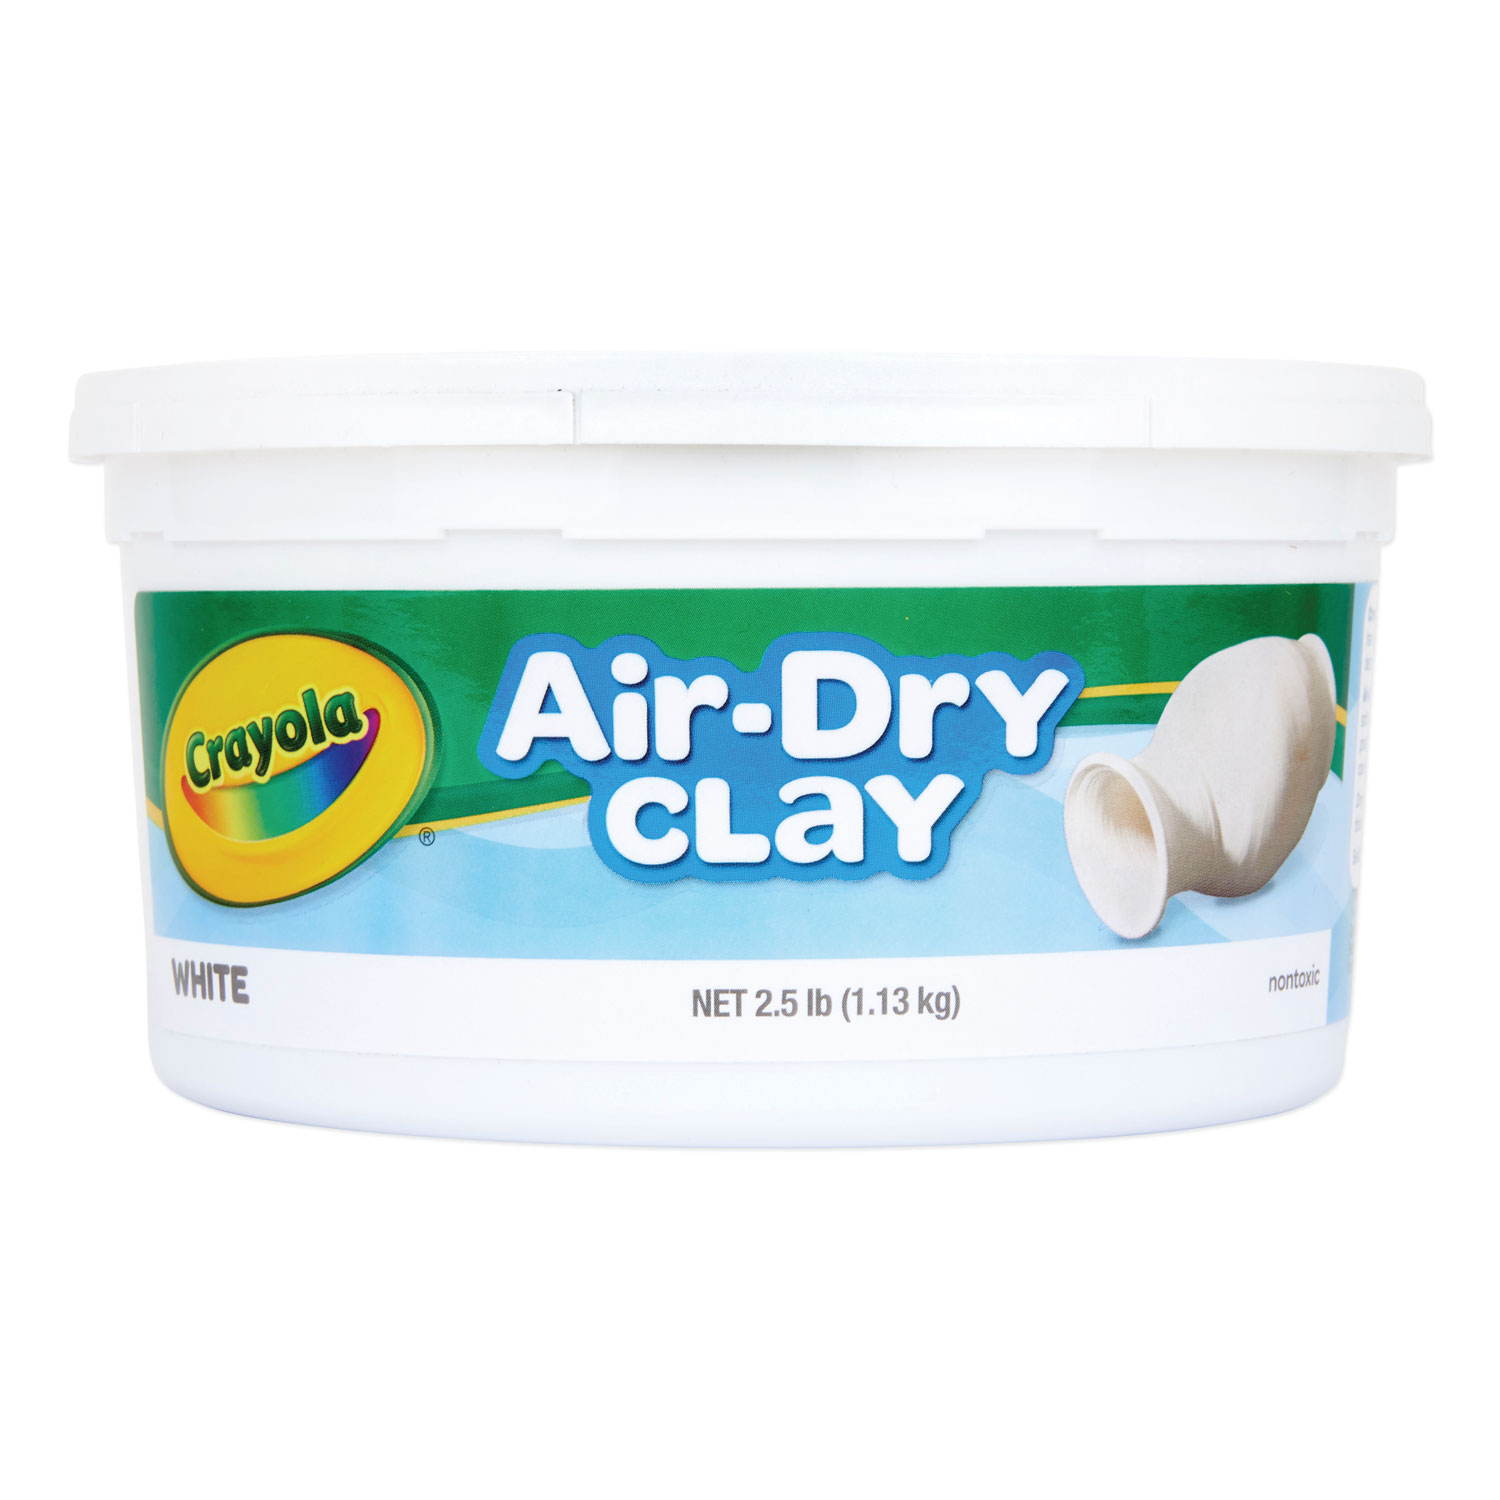  Crayola 575050 Air-Dry Clay, White, 2 1/2 lbs (CYO575050) 